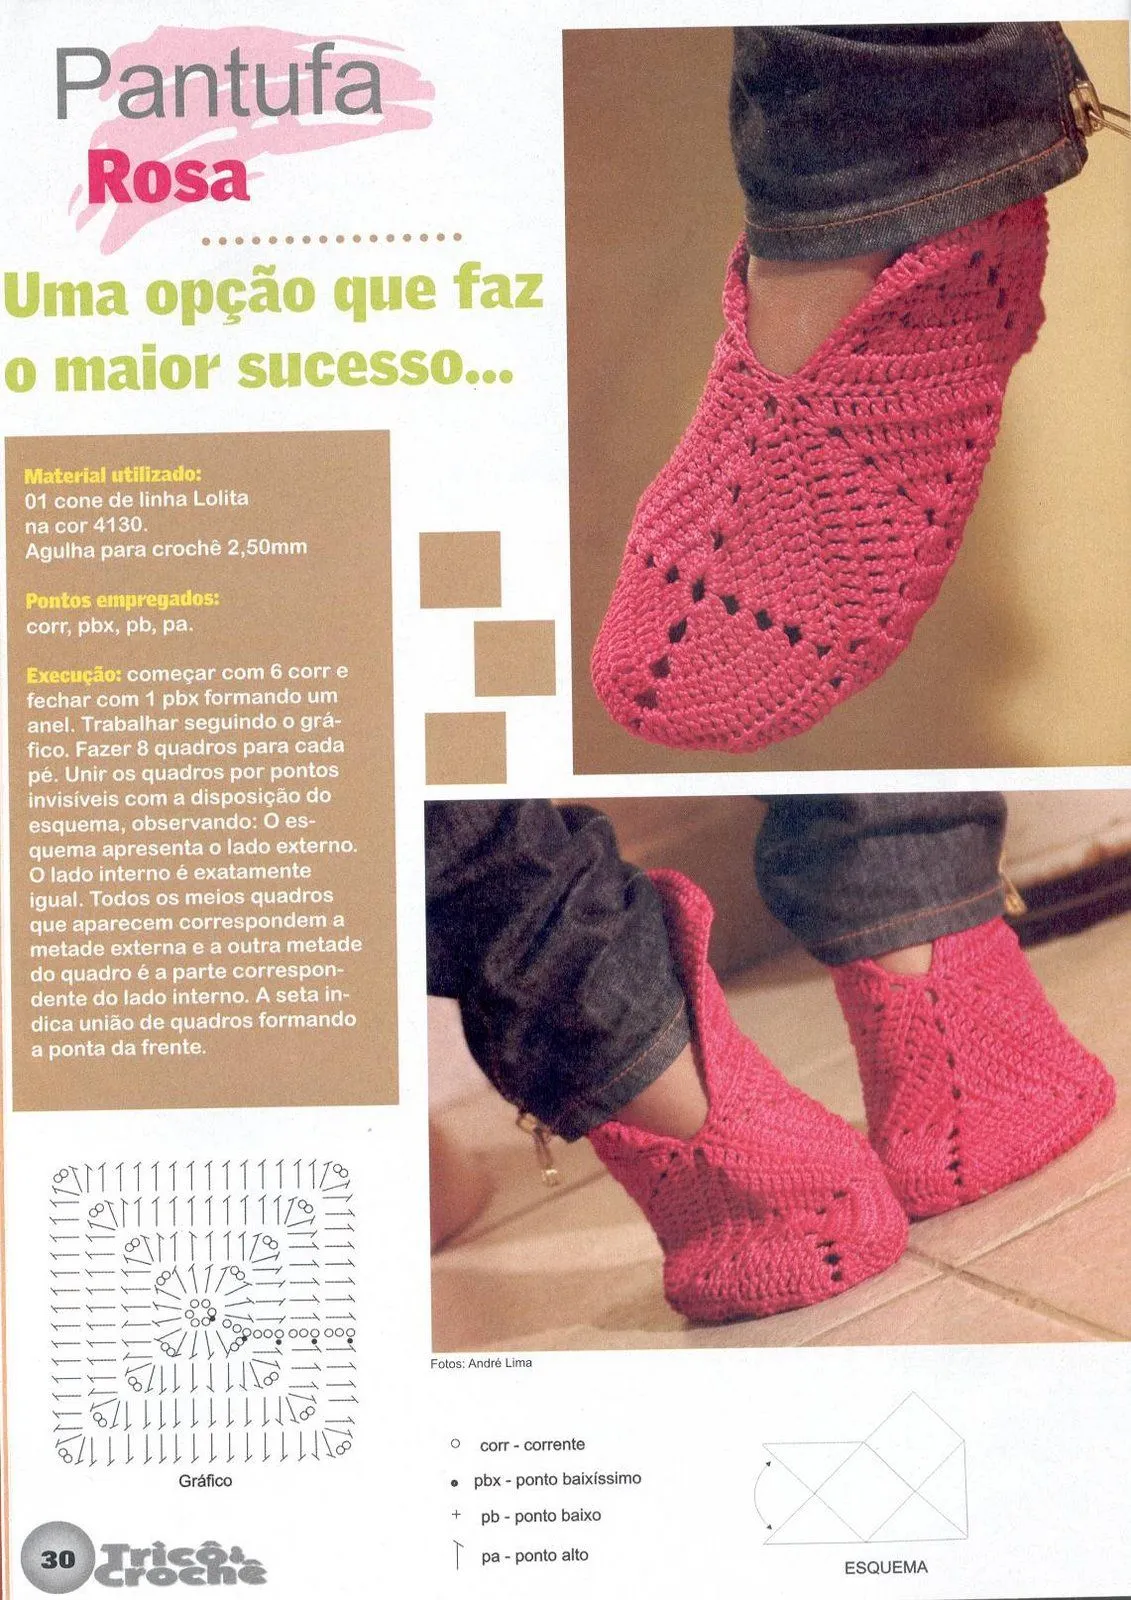 Pantuflas en crochet patrones - Imagui